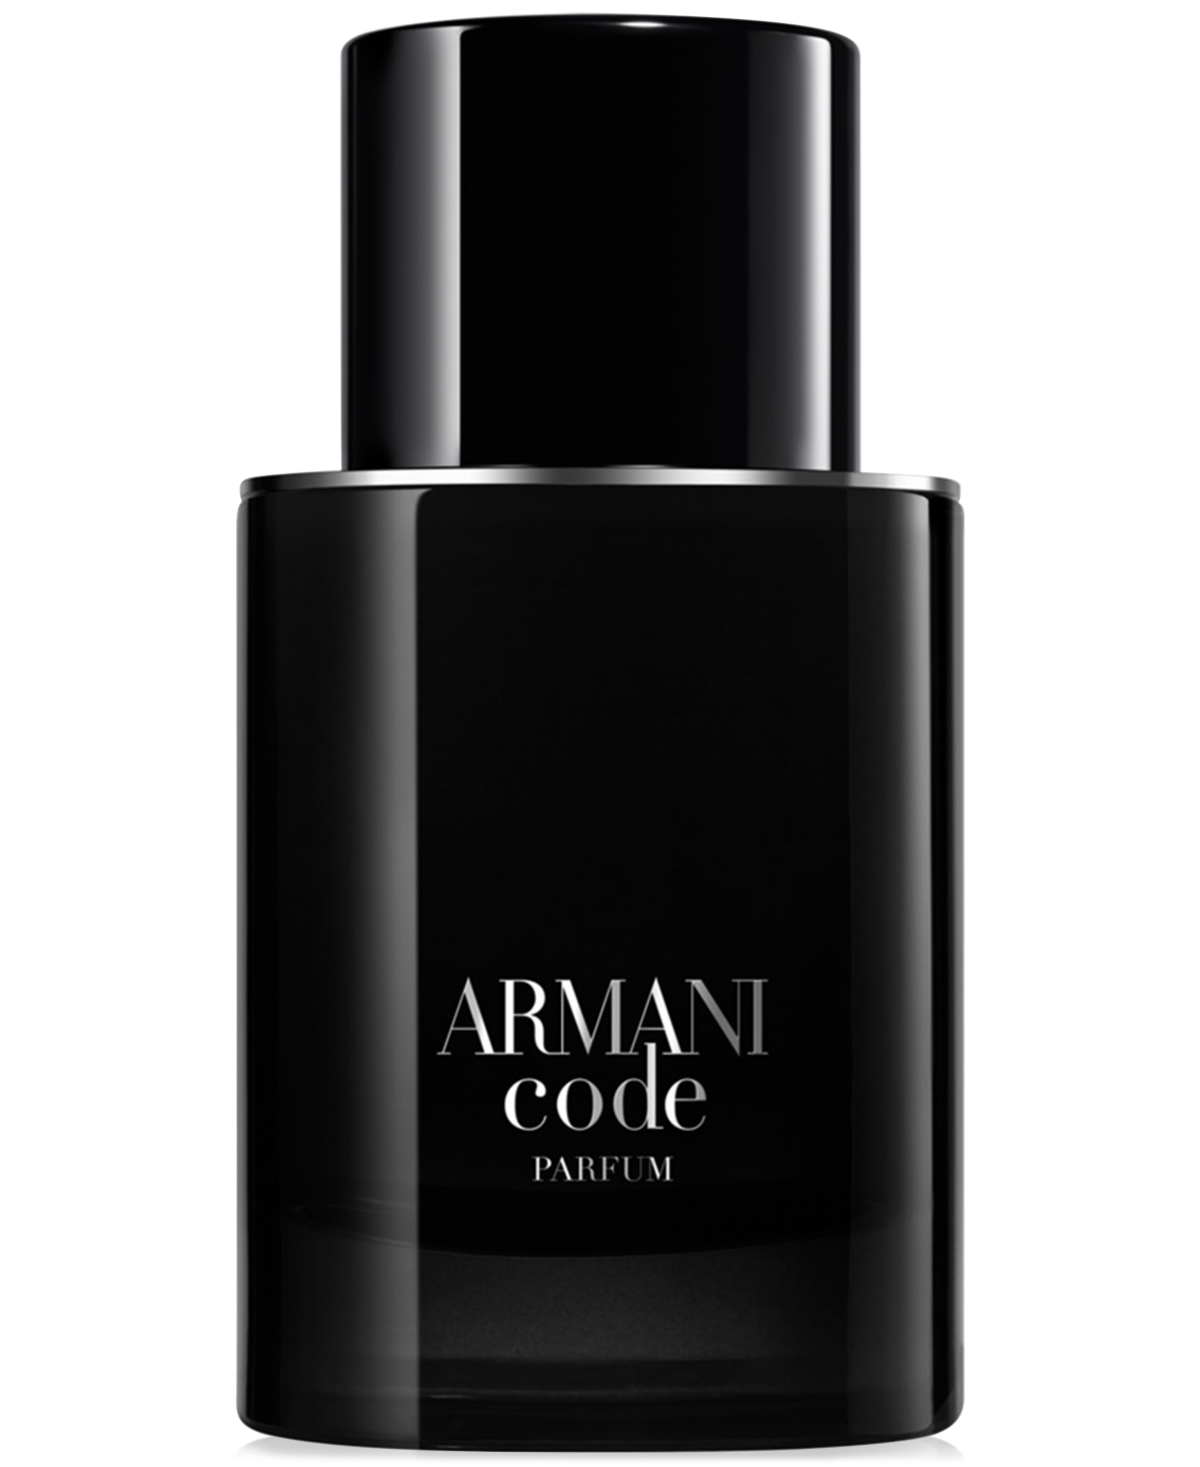 Armani Beauty Men's Armani Code Parfum, 1.7oz.